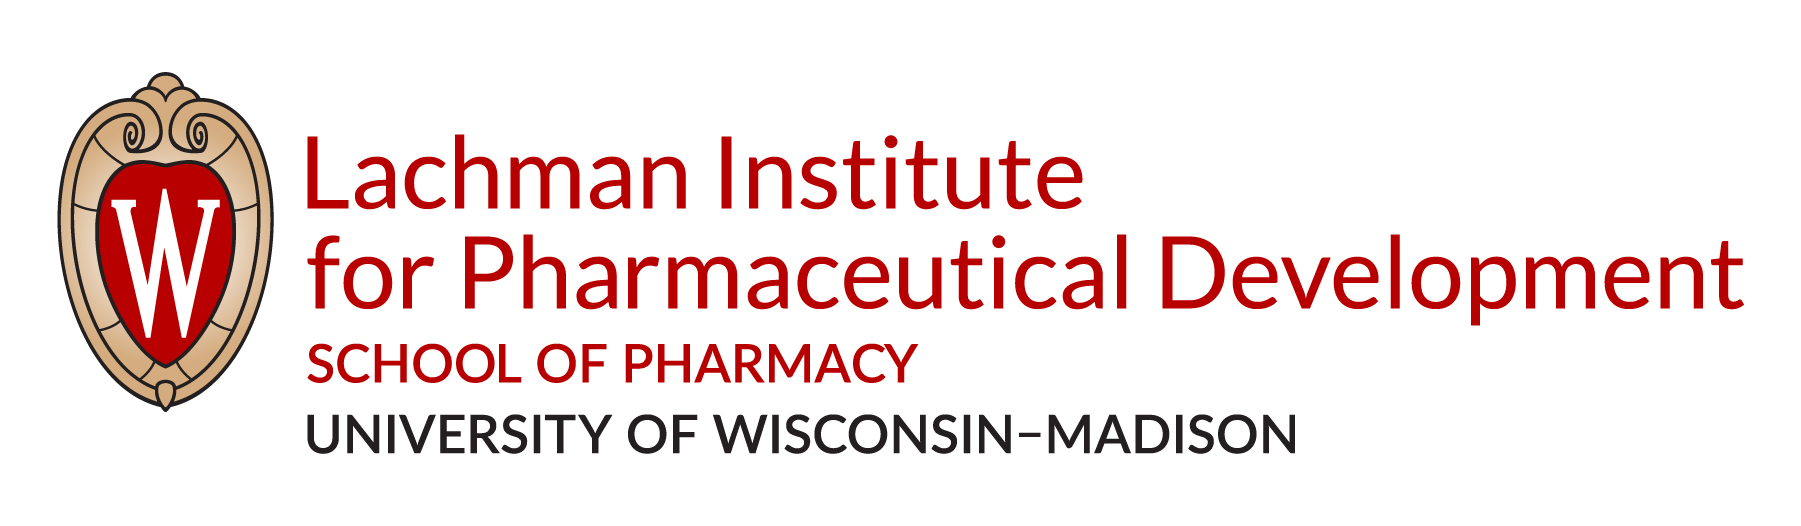 Lachman Institute for Pharmaceutical Development logo